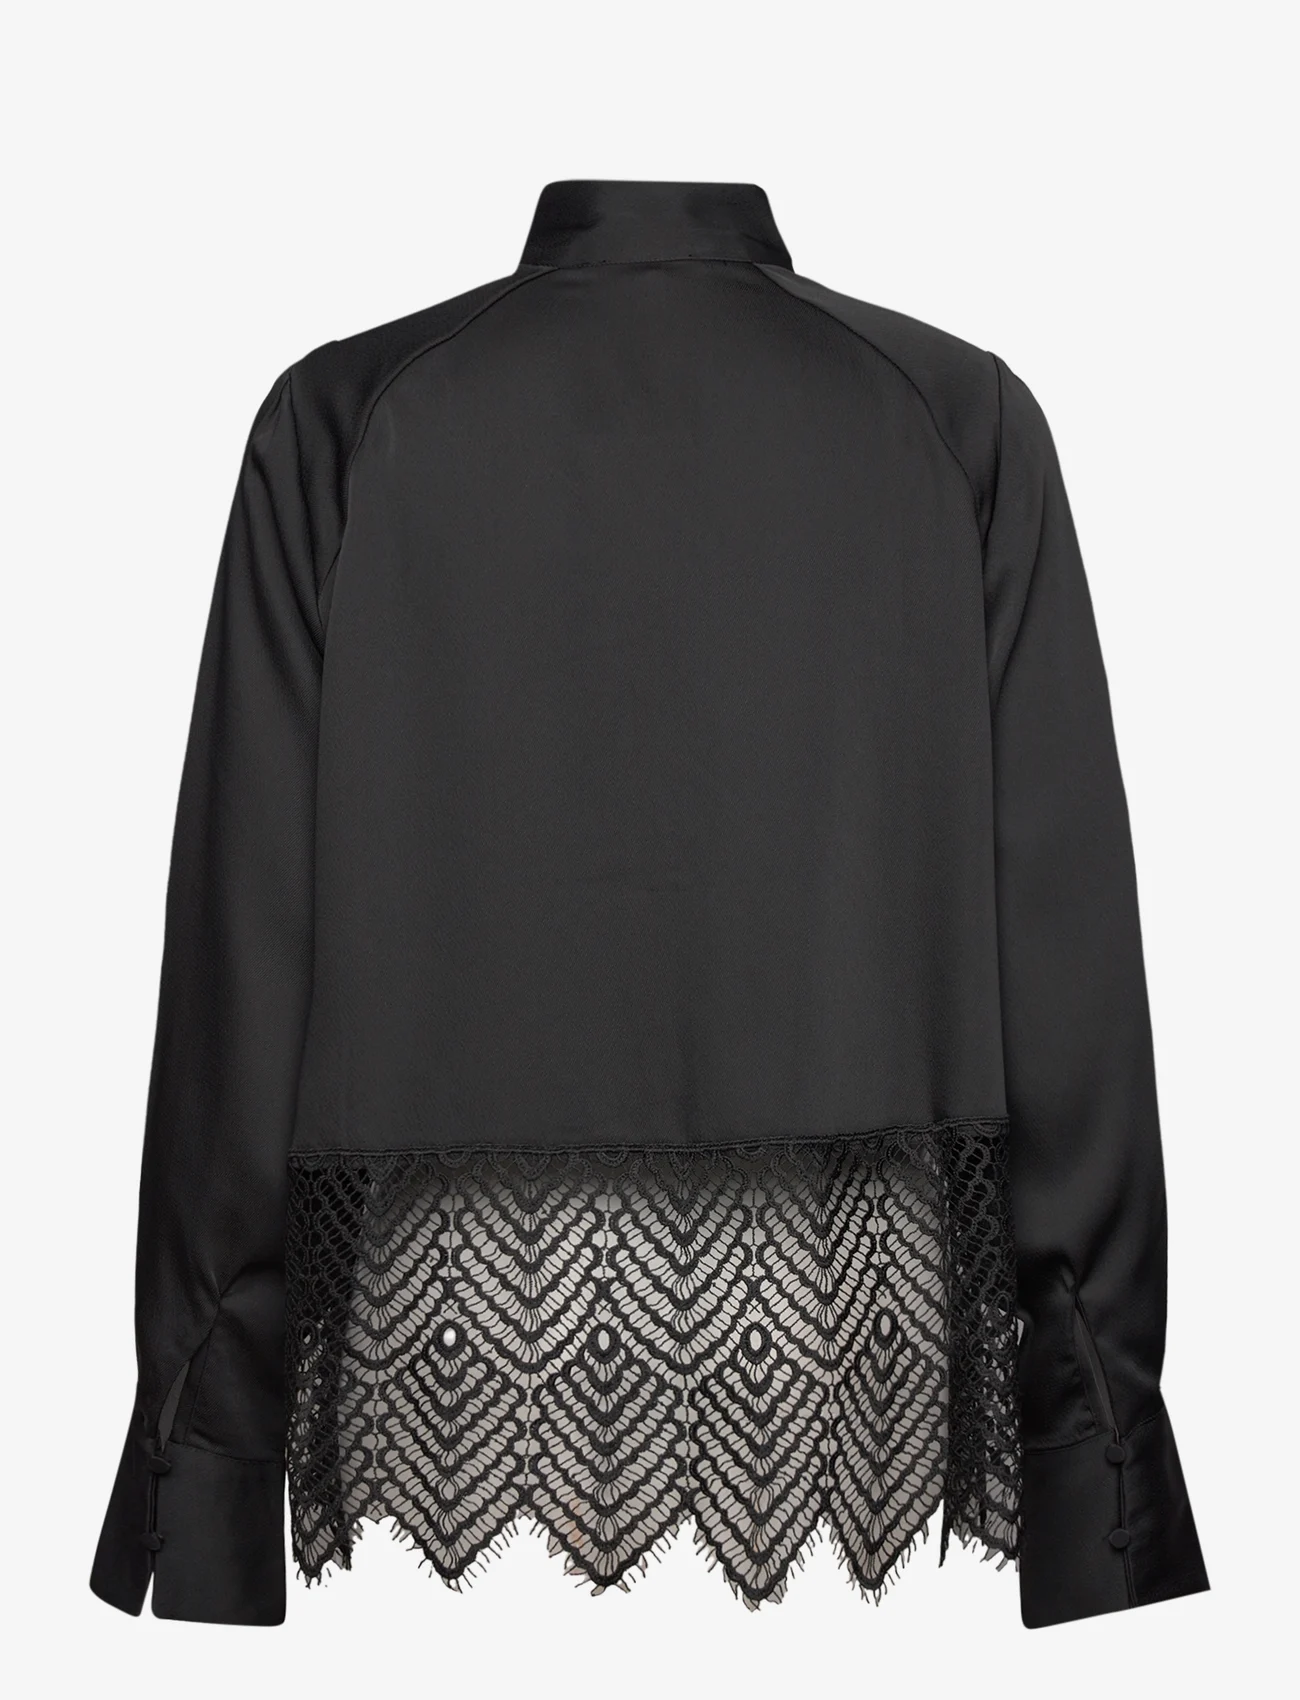 Bruuns Bazaar - CedarsBBChatrina blouse - long-sleeved blouses - black - 1